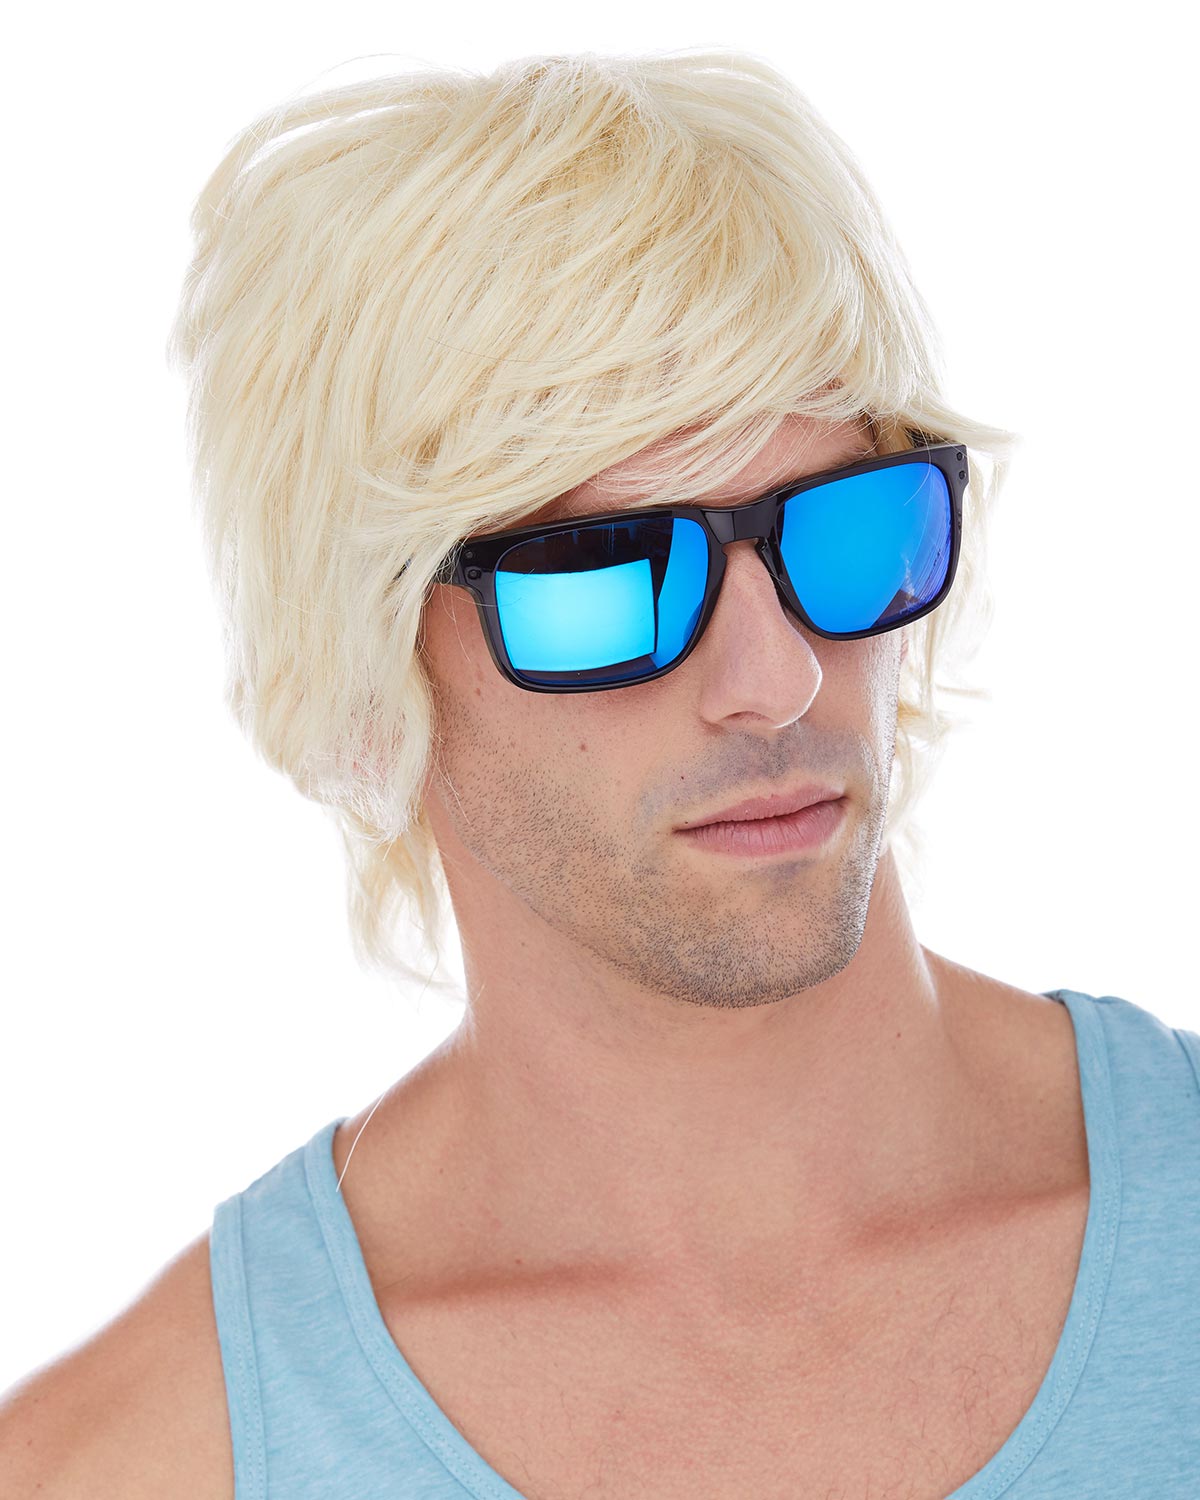 Surfer Dude in 11 - Blonde